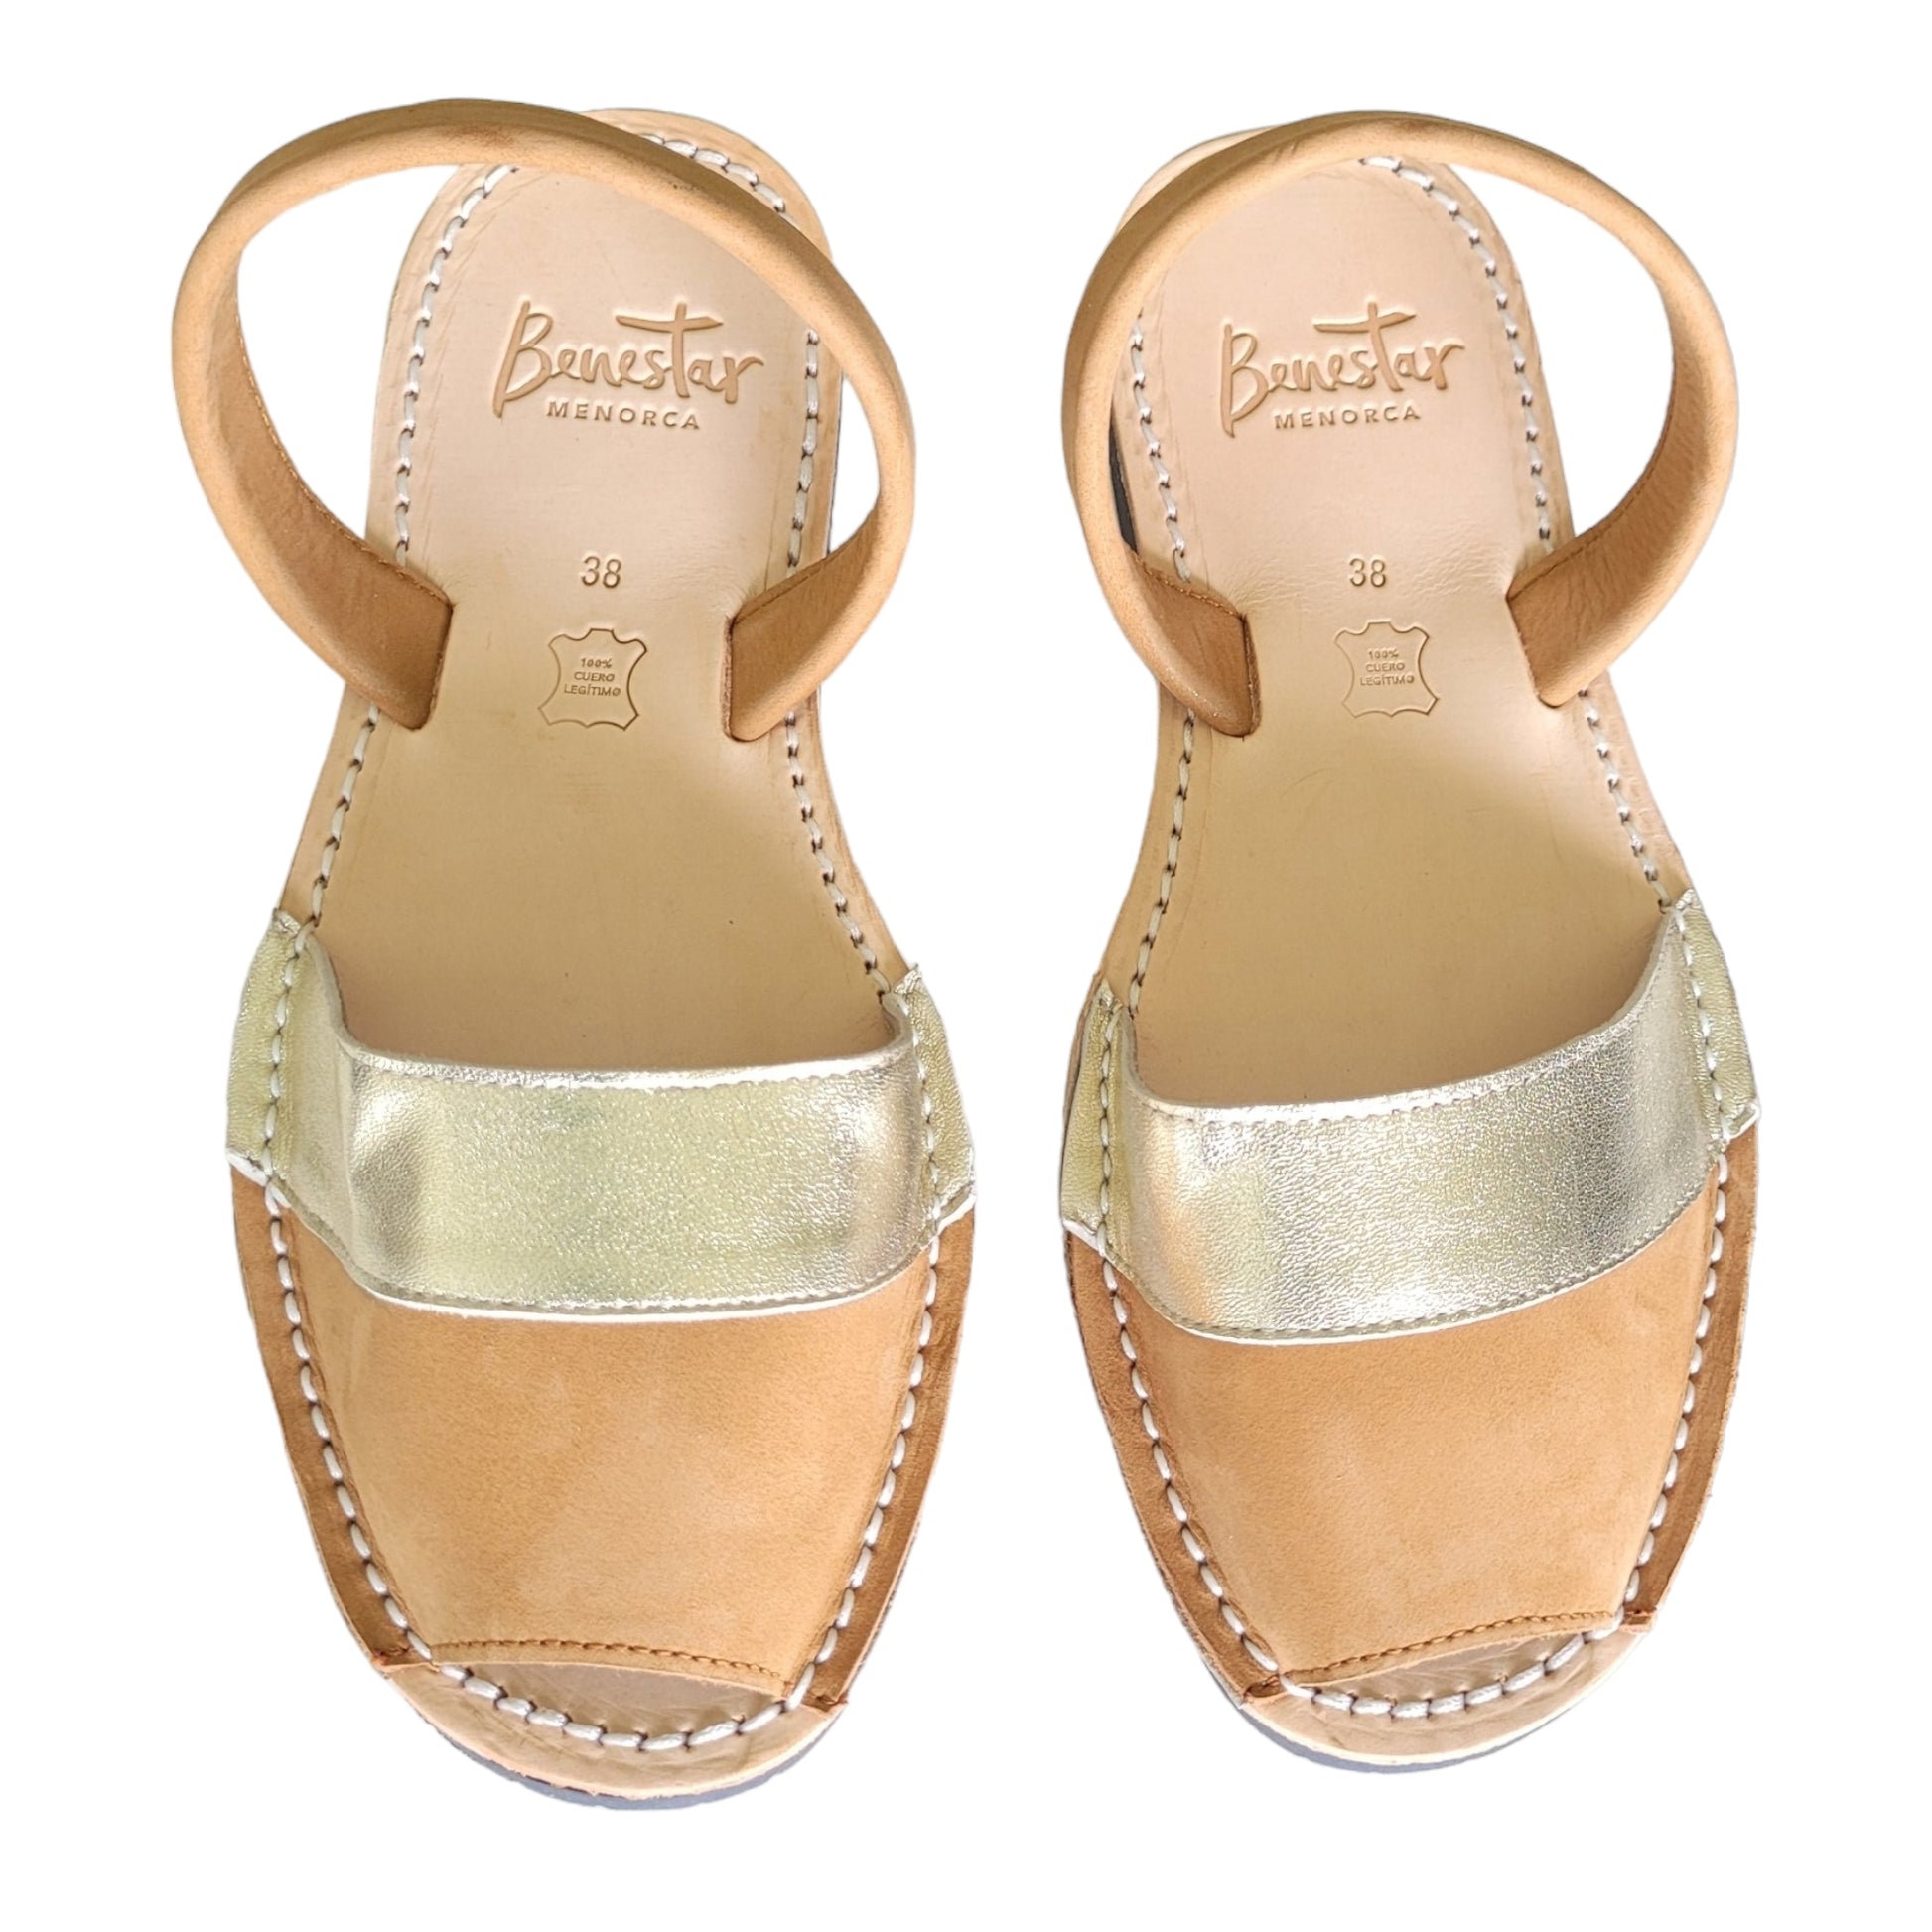 Duo-Gold-Tan-Avarca-sandals